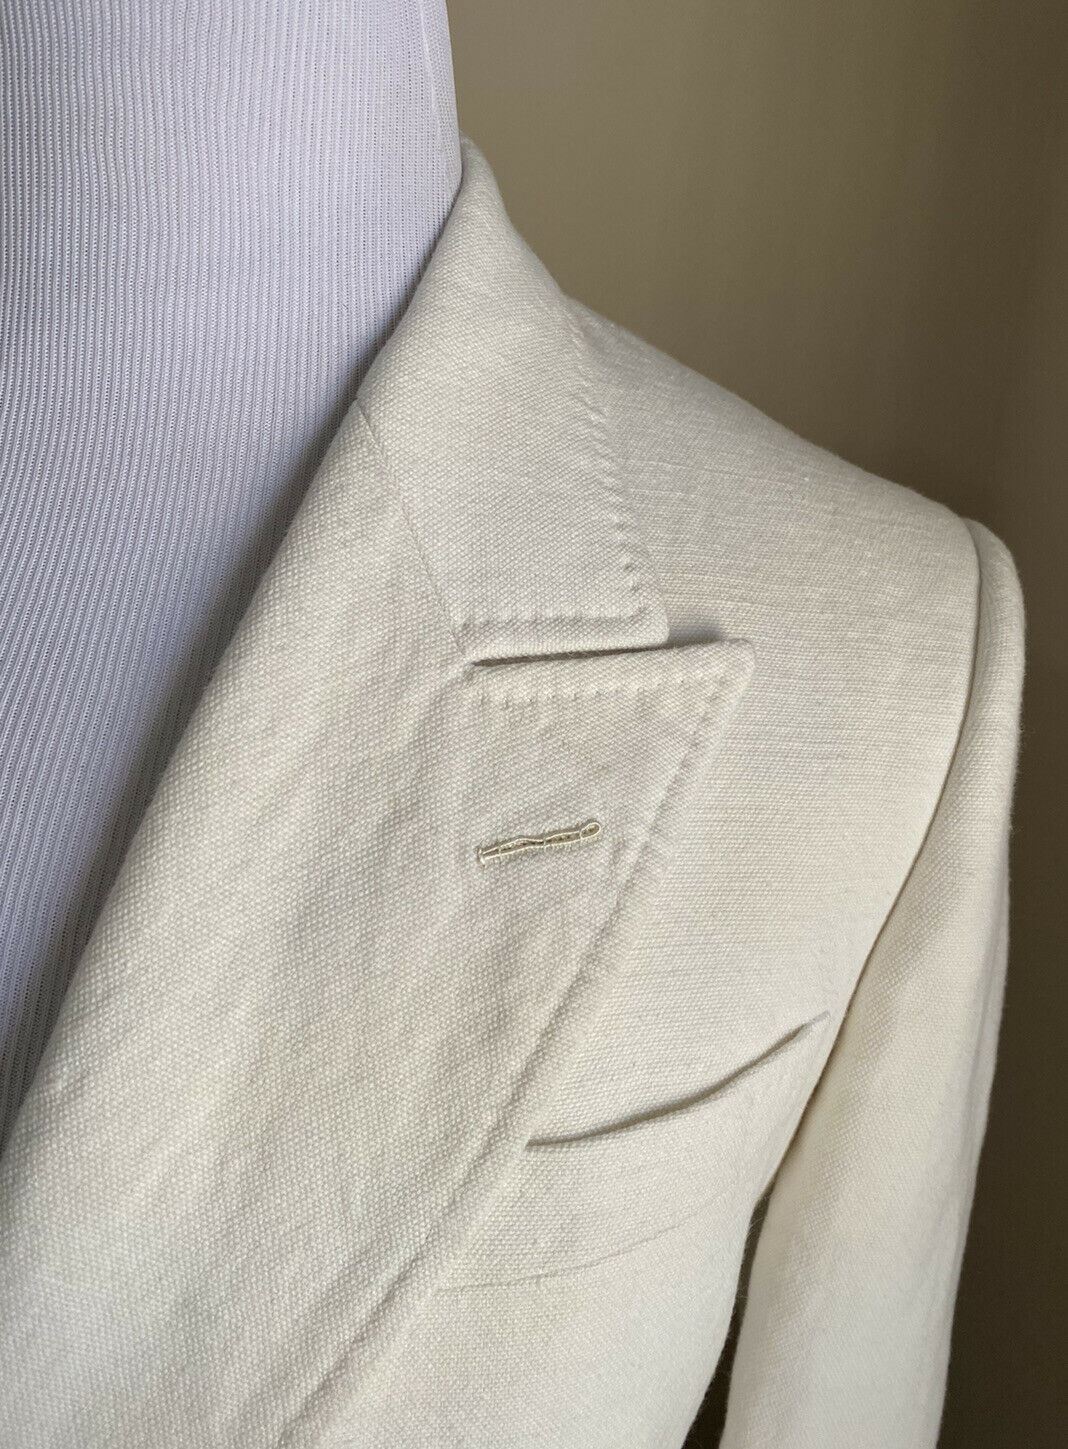 NWT $4800 Gucci Men Linen/Cotton Sport Coat Jacket Blazer White 40R US/50R Eu